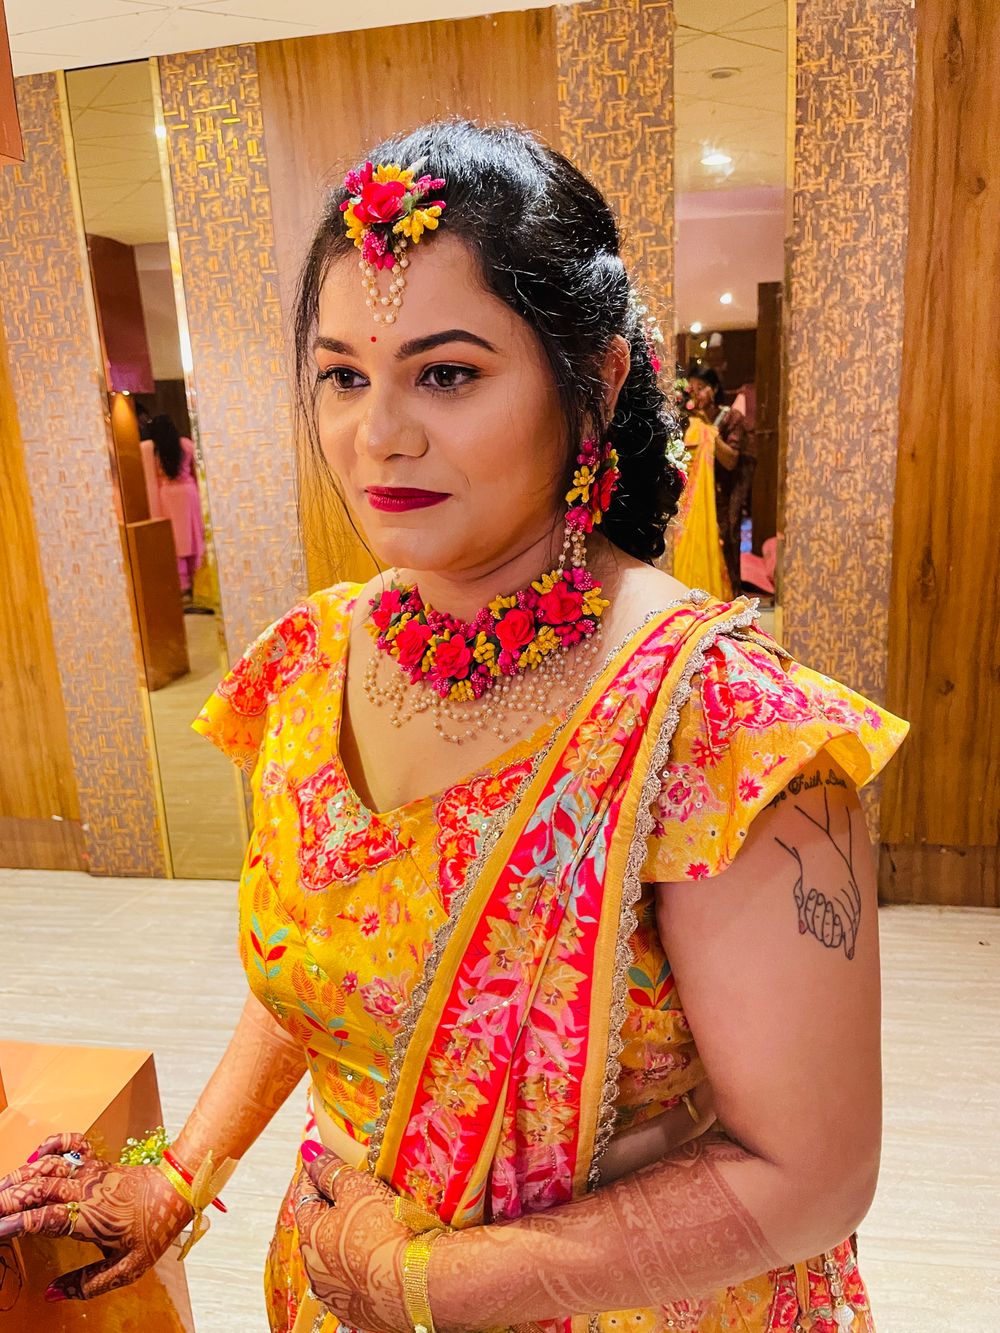 Photo From Haldimehndi Bride - By Sheetal Rathore's Makeover